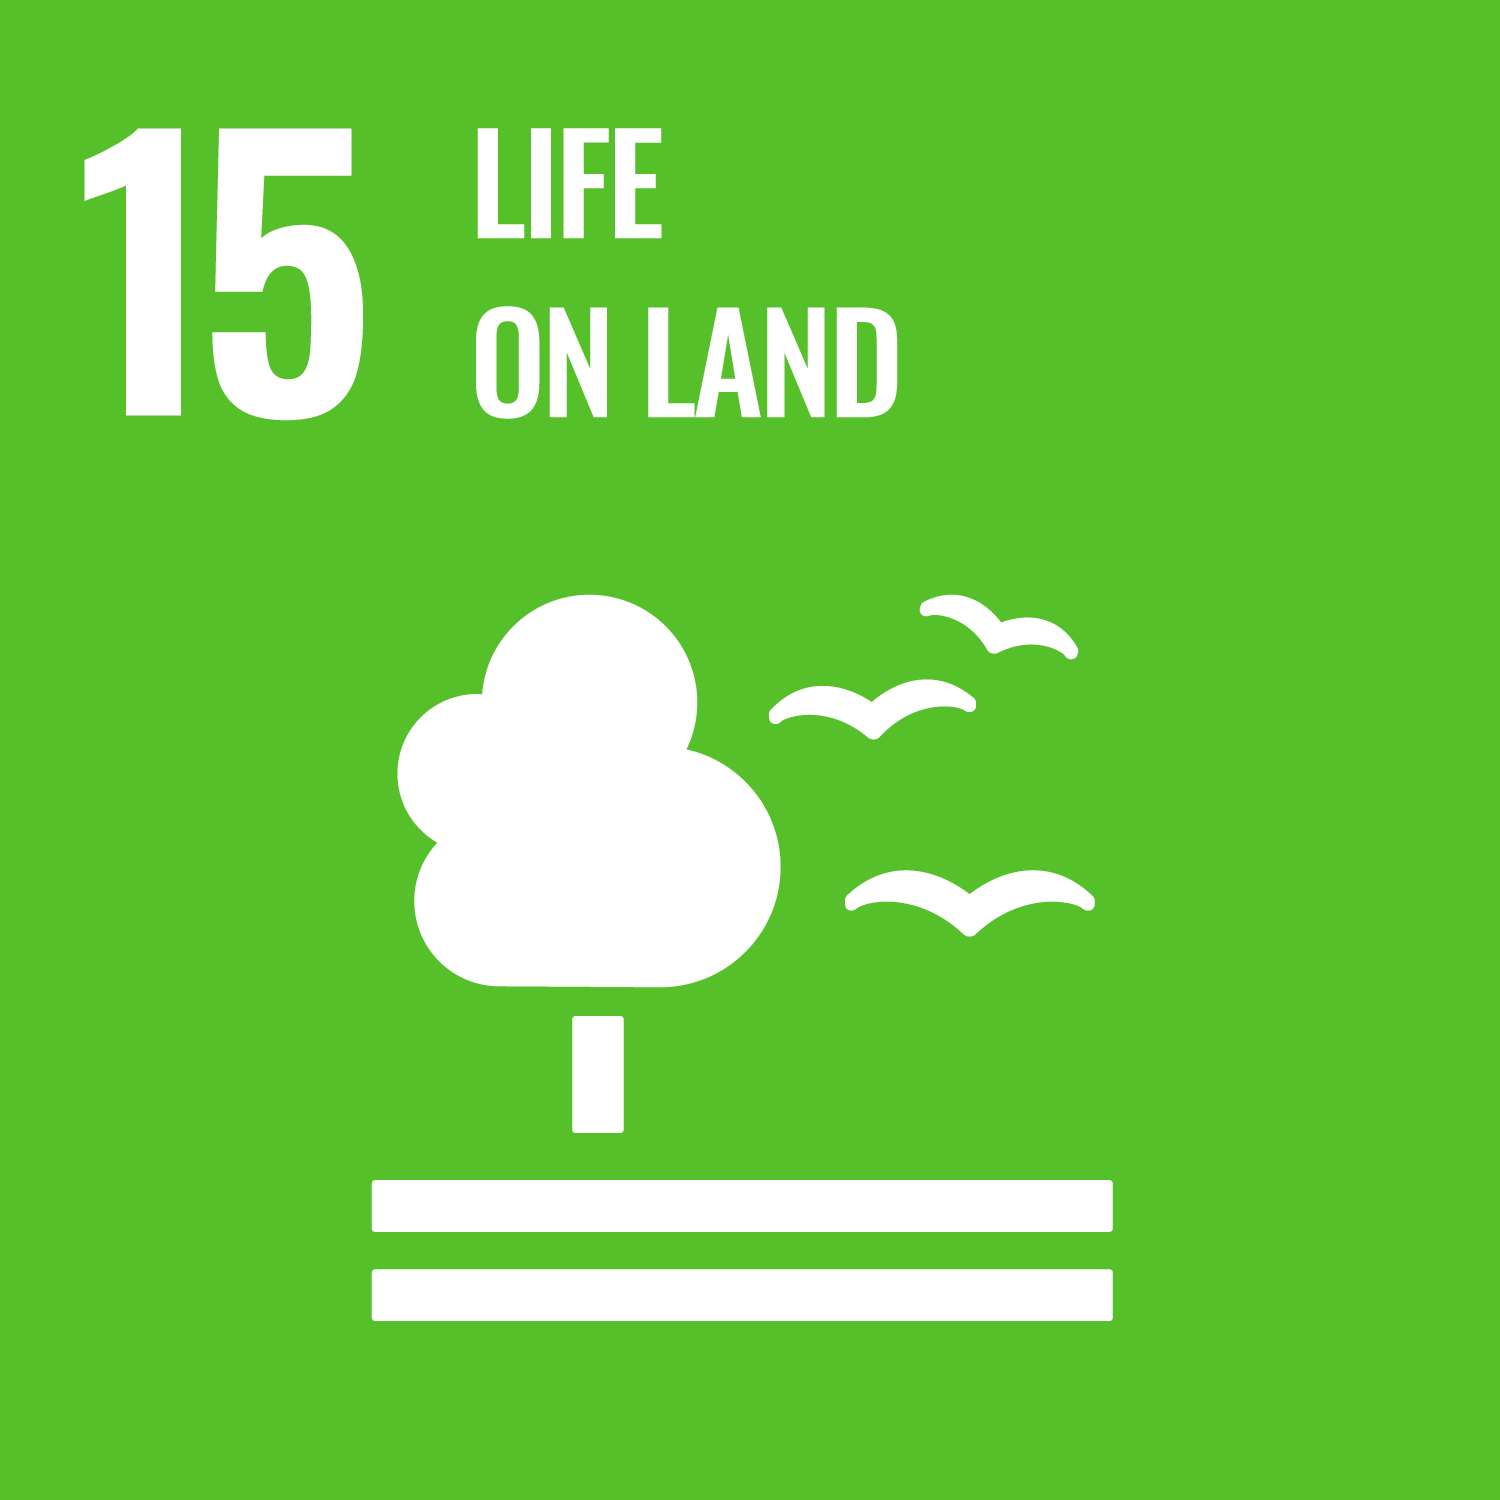 Life on land (SDG-15)